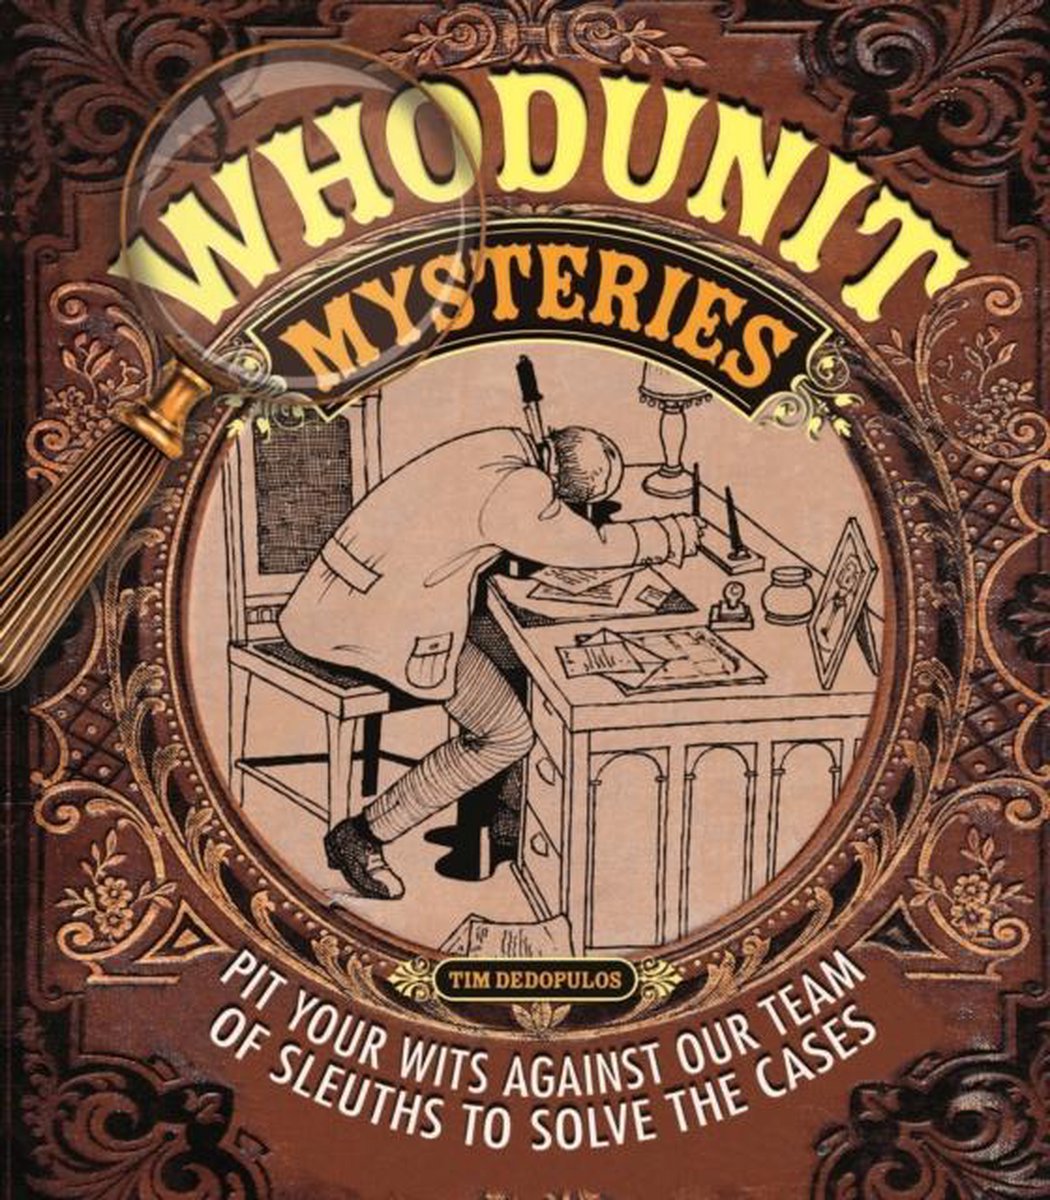 Whodunit Mysteries - Tim Dedapolous